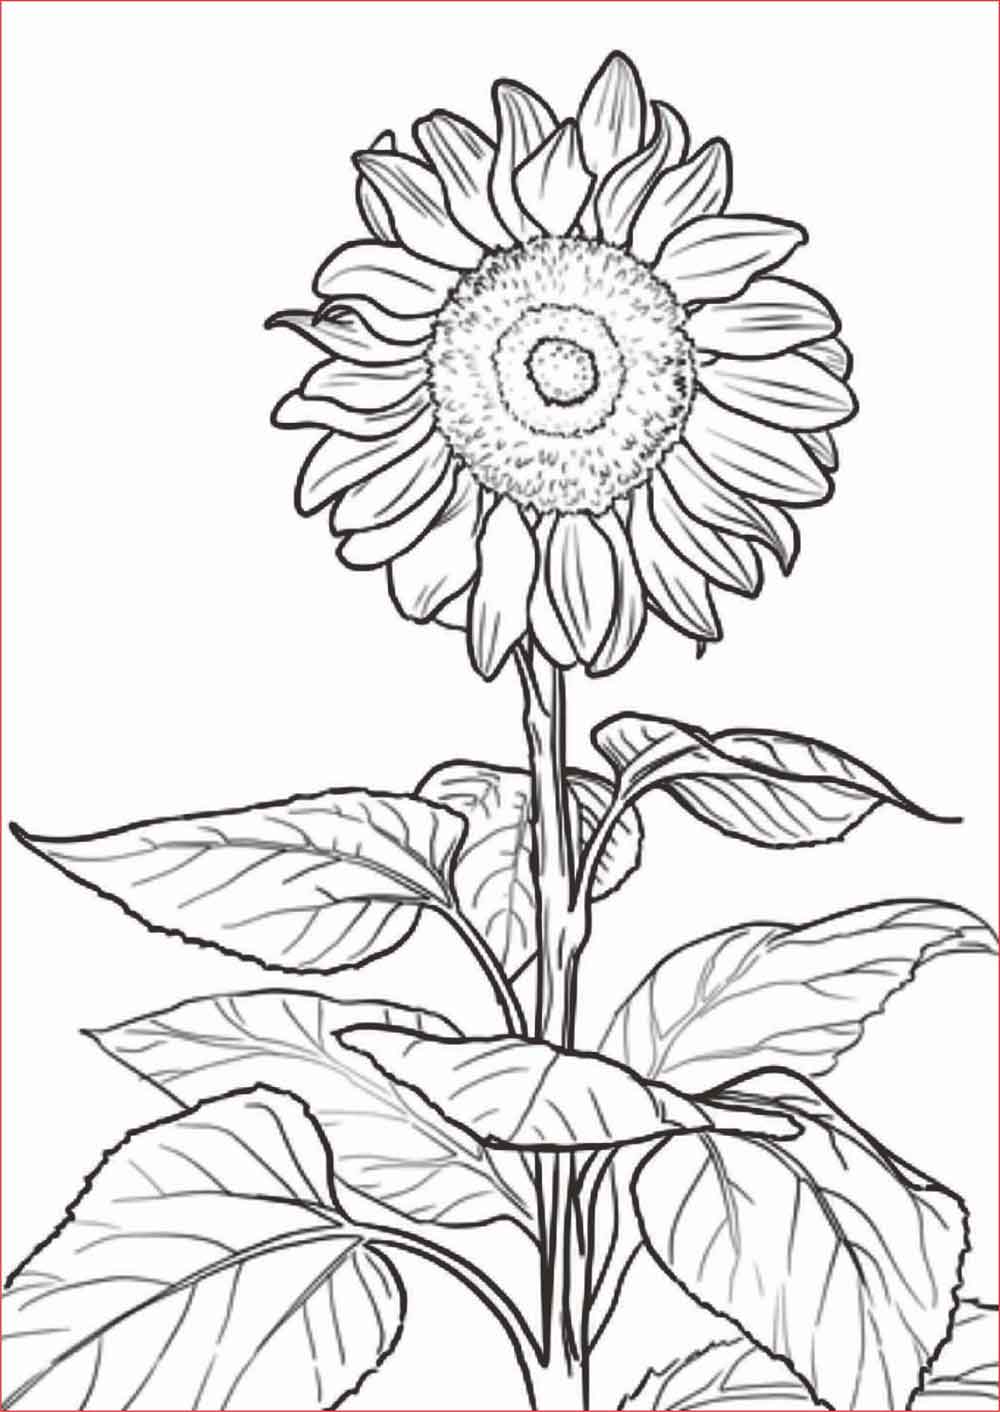 25 Gambar Sketsa Bunga Yg Mudah 